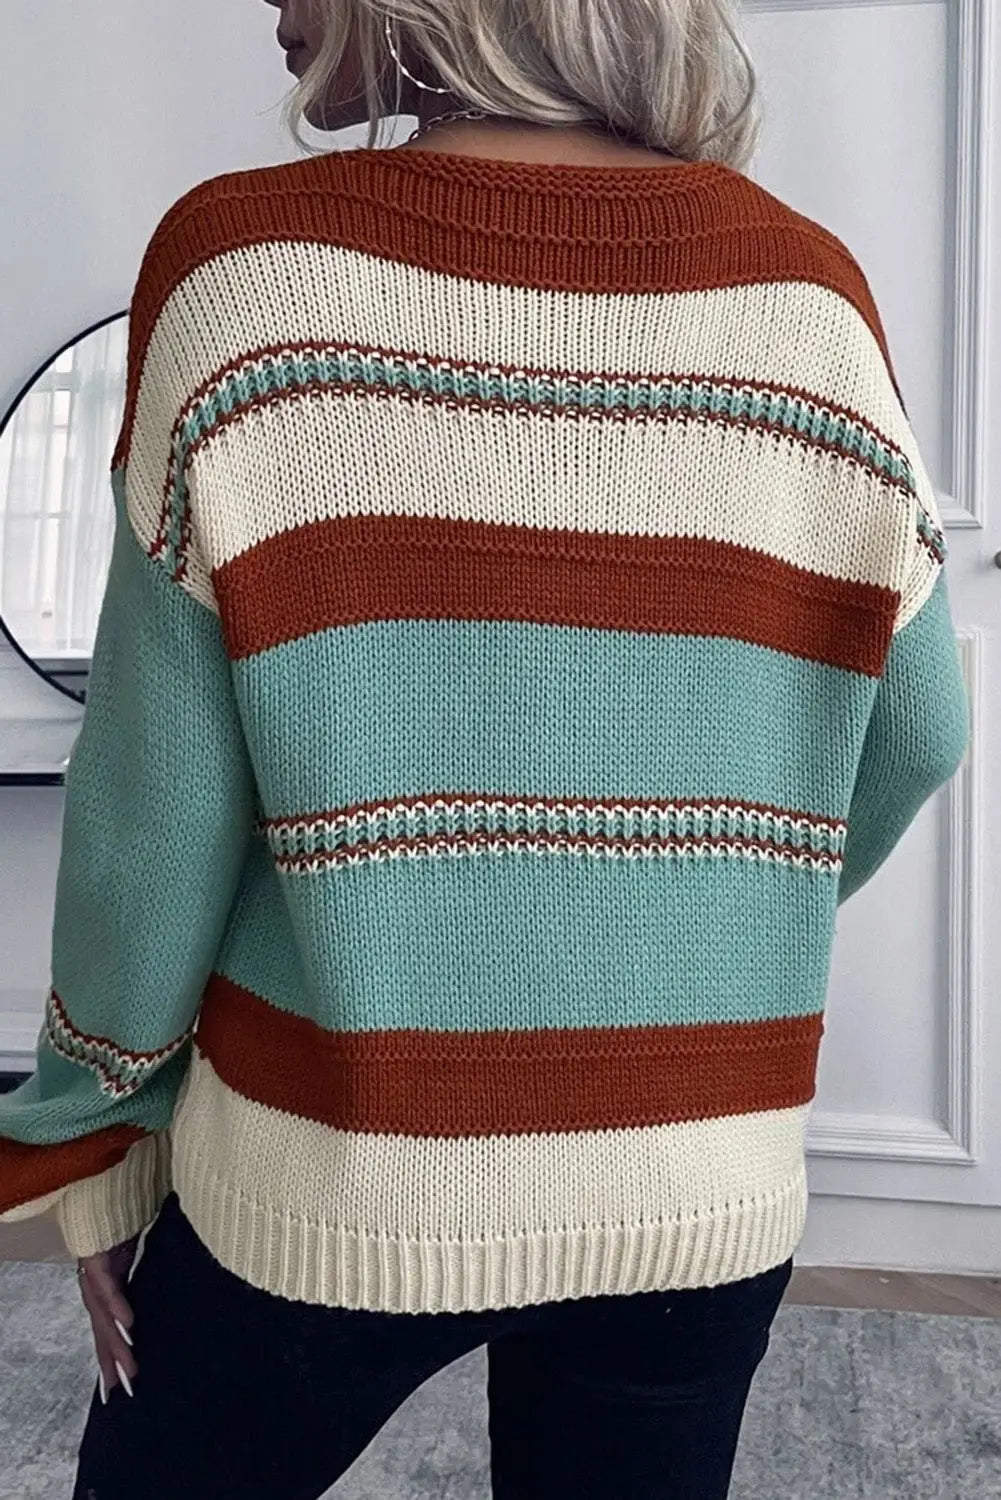 Sky blue striped pattern knit v neck sweater - sweaters & cardigans